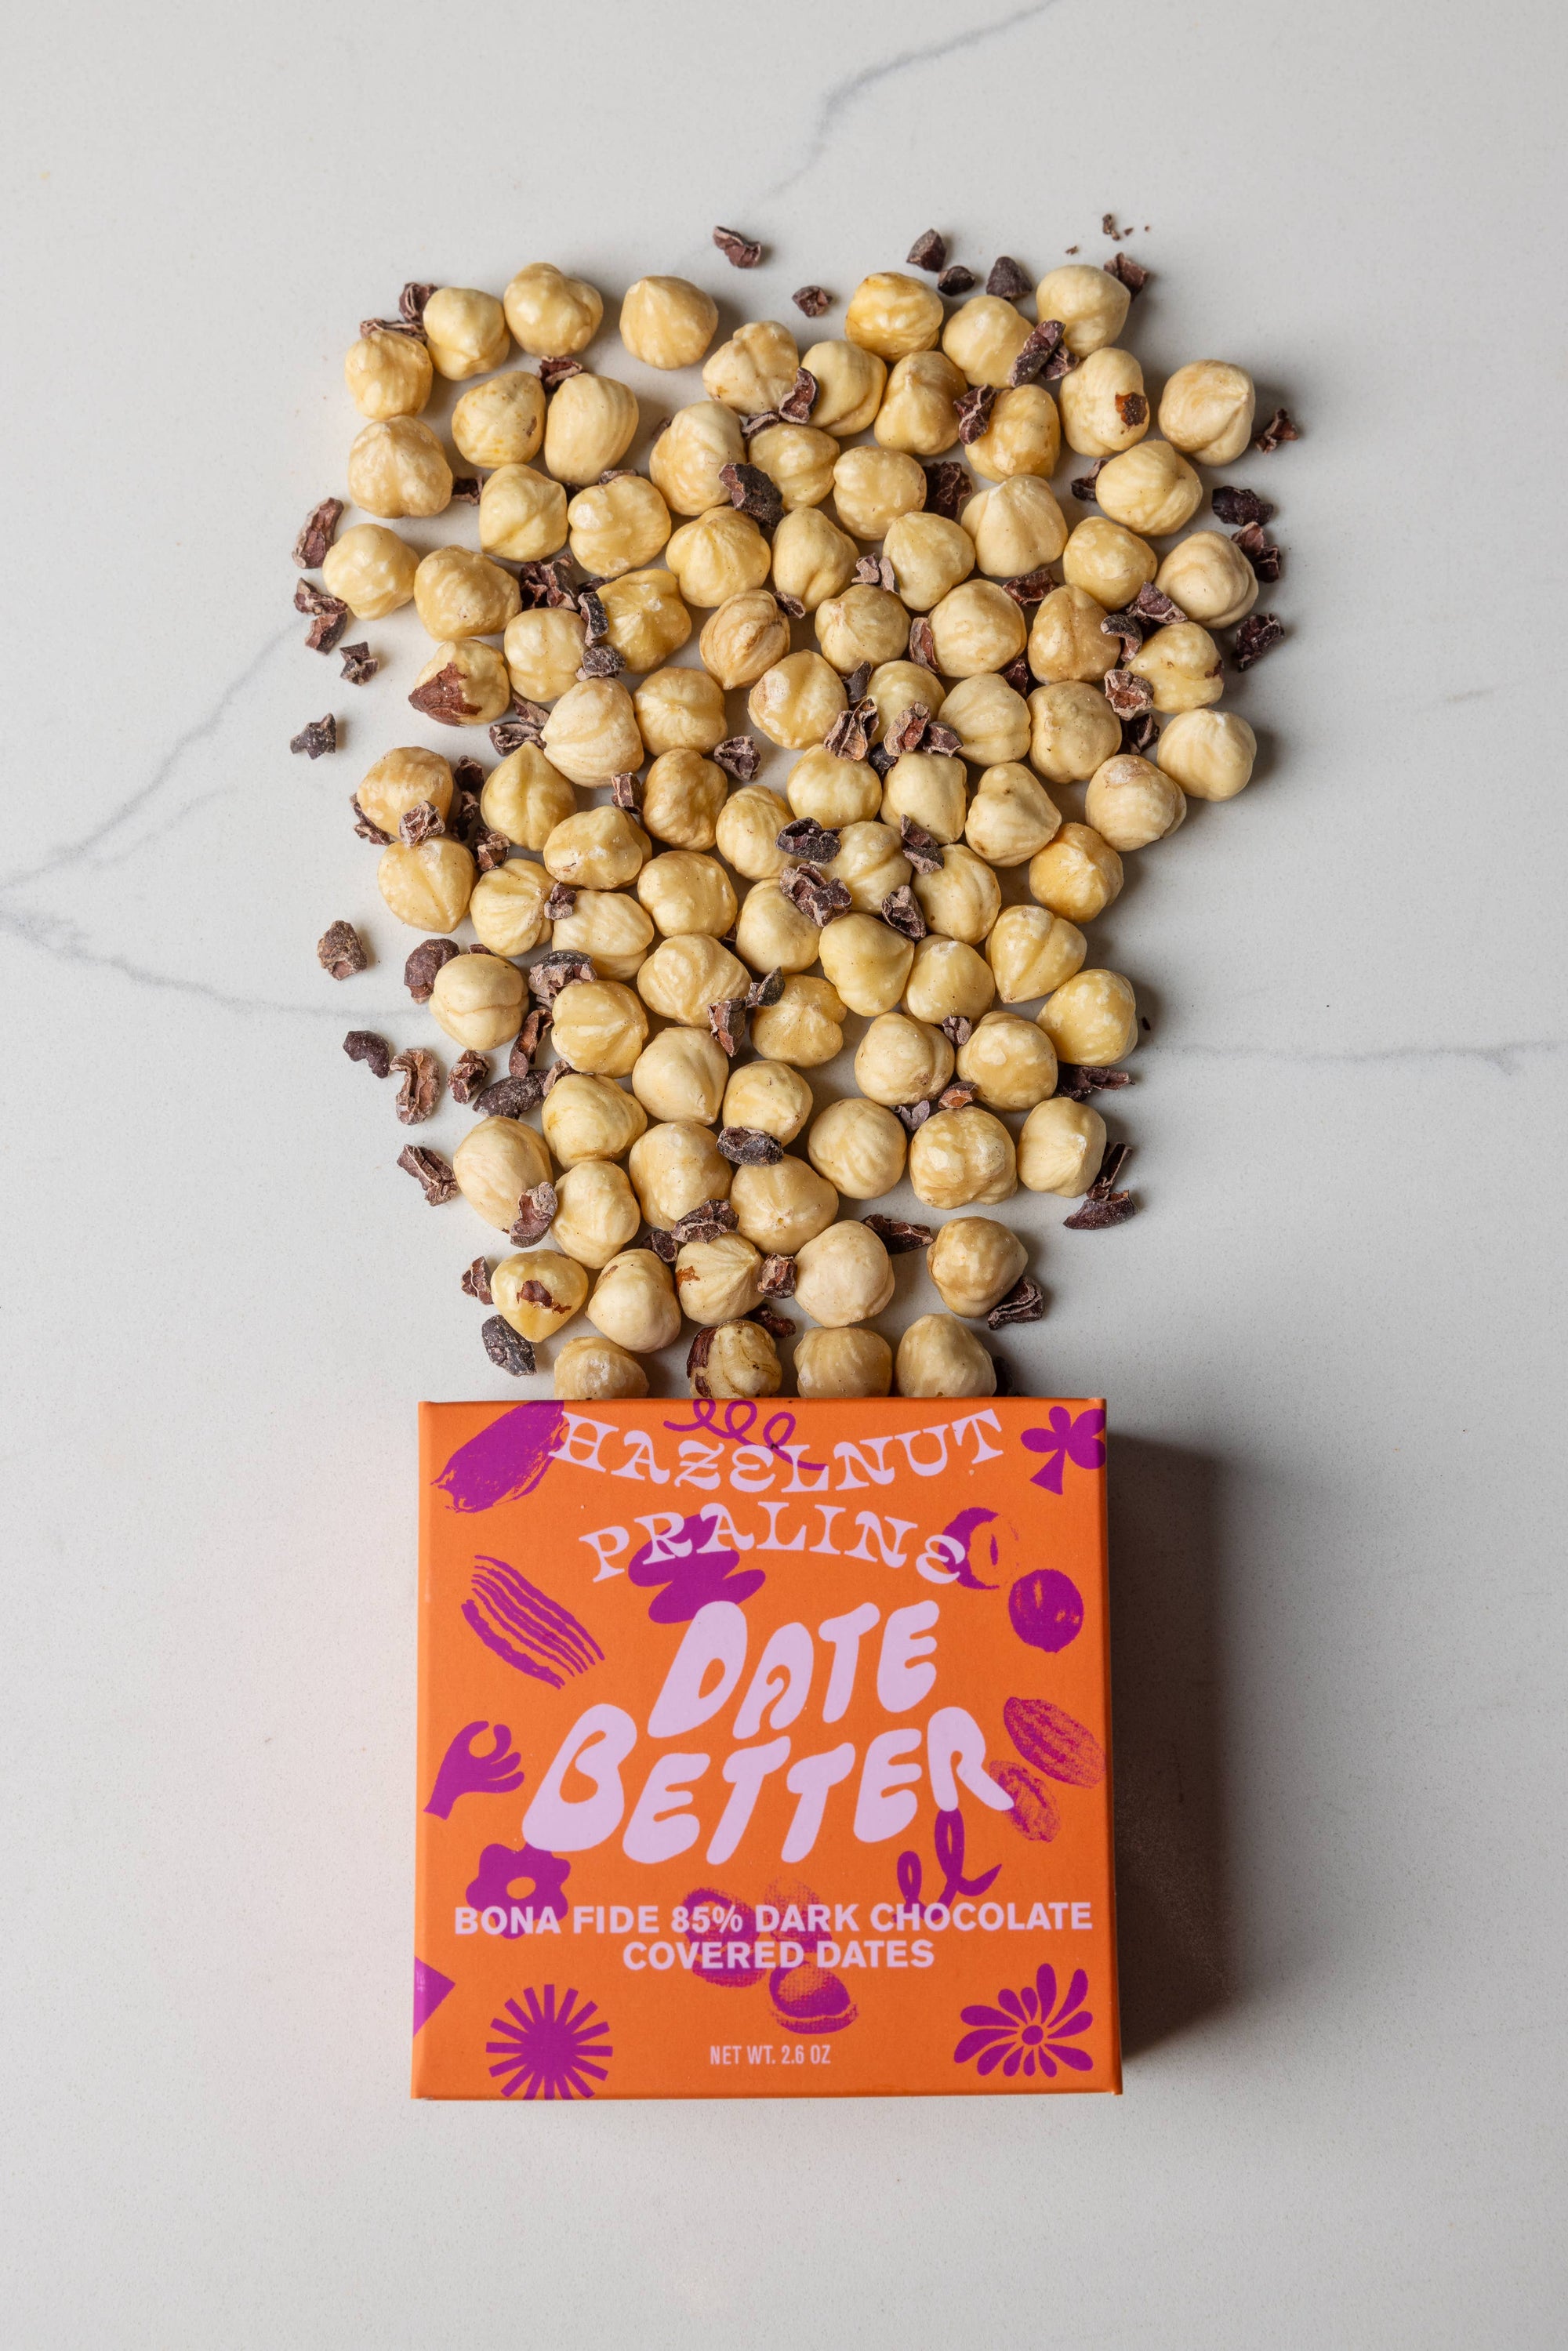 Date Better - Chocolate Covered Dates - Hazelnut Praline - Space Camp